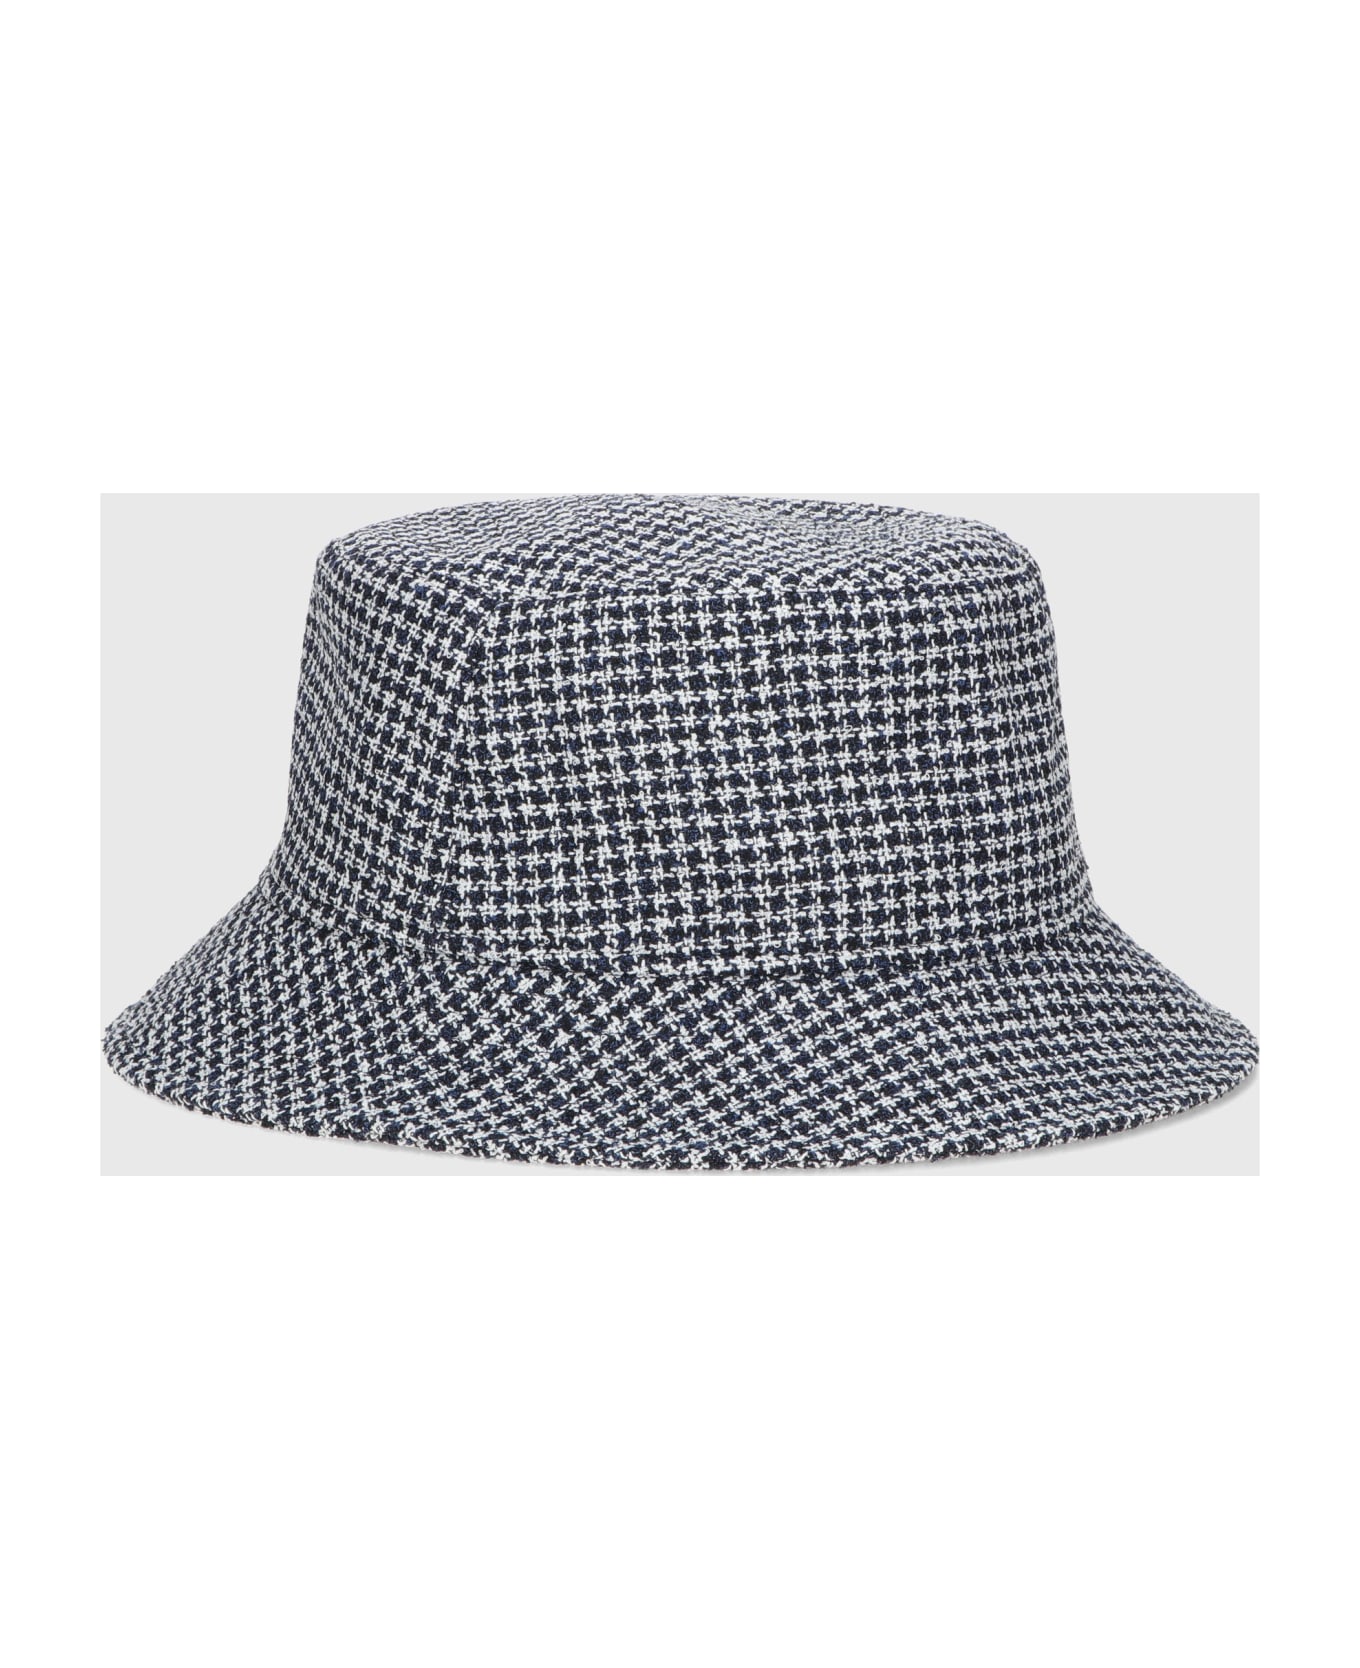 Borsalino Mistero Bucket - HOUNDSTOOTH NAVY BLUE/WHITE 帽子